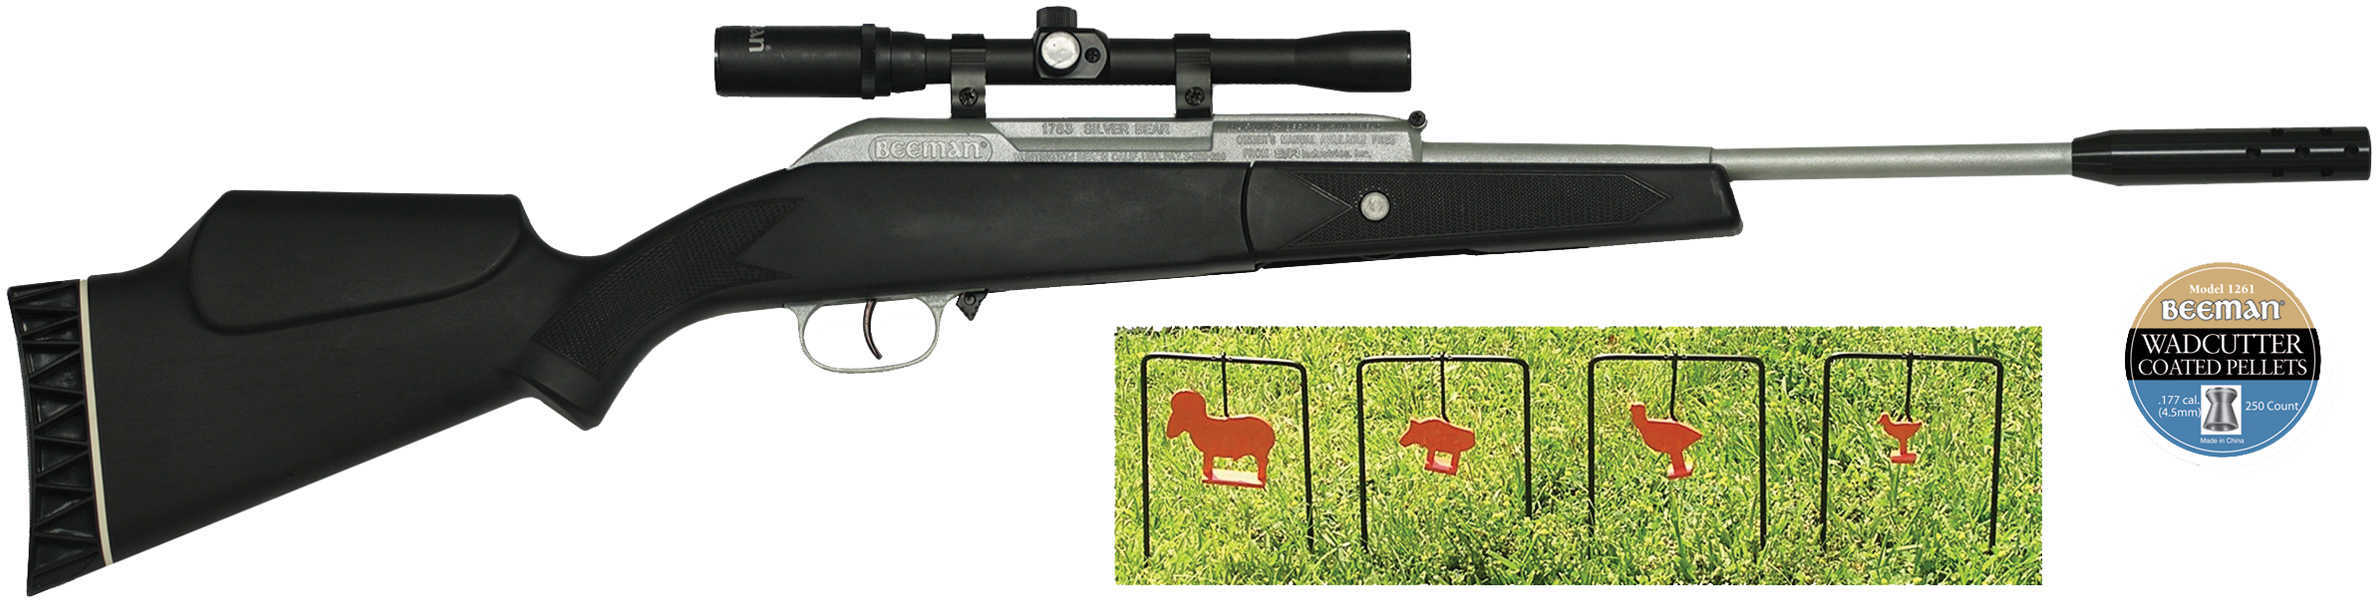 Beeman Ranger Shooters Kit W/ Targets & Ammo